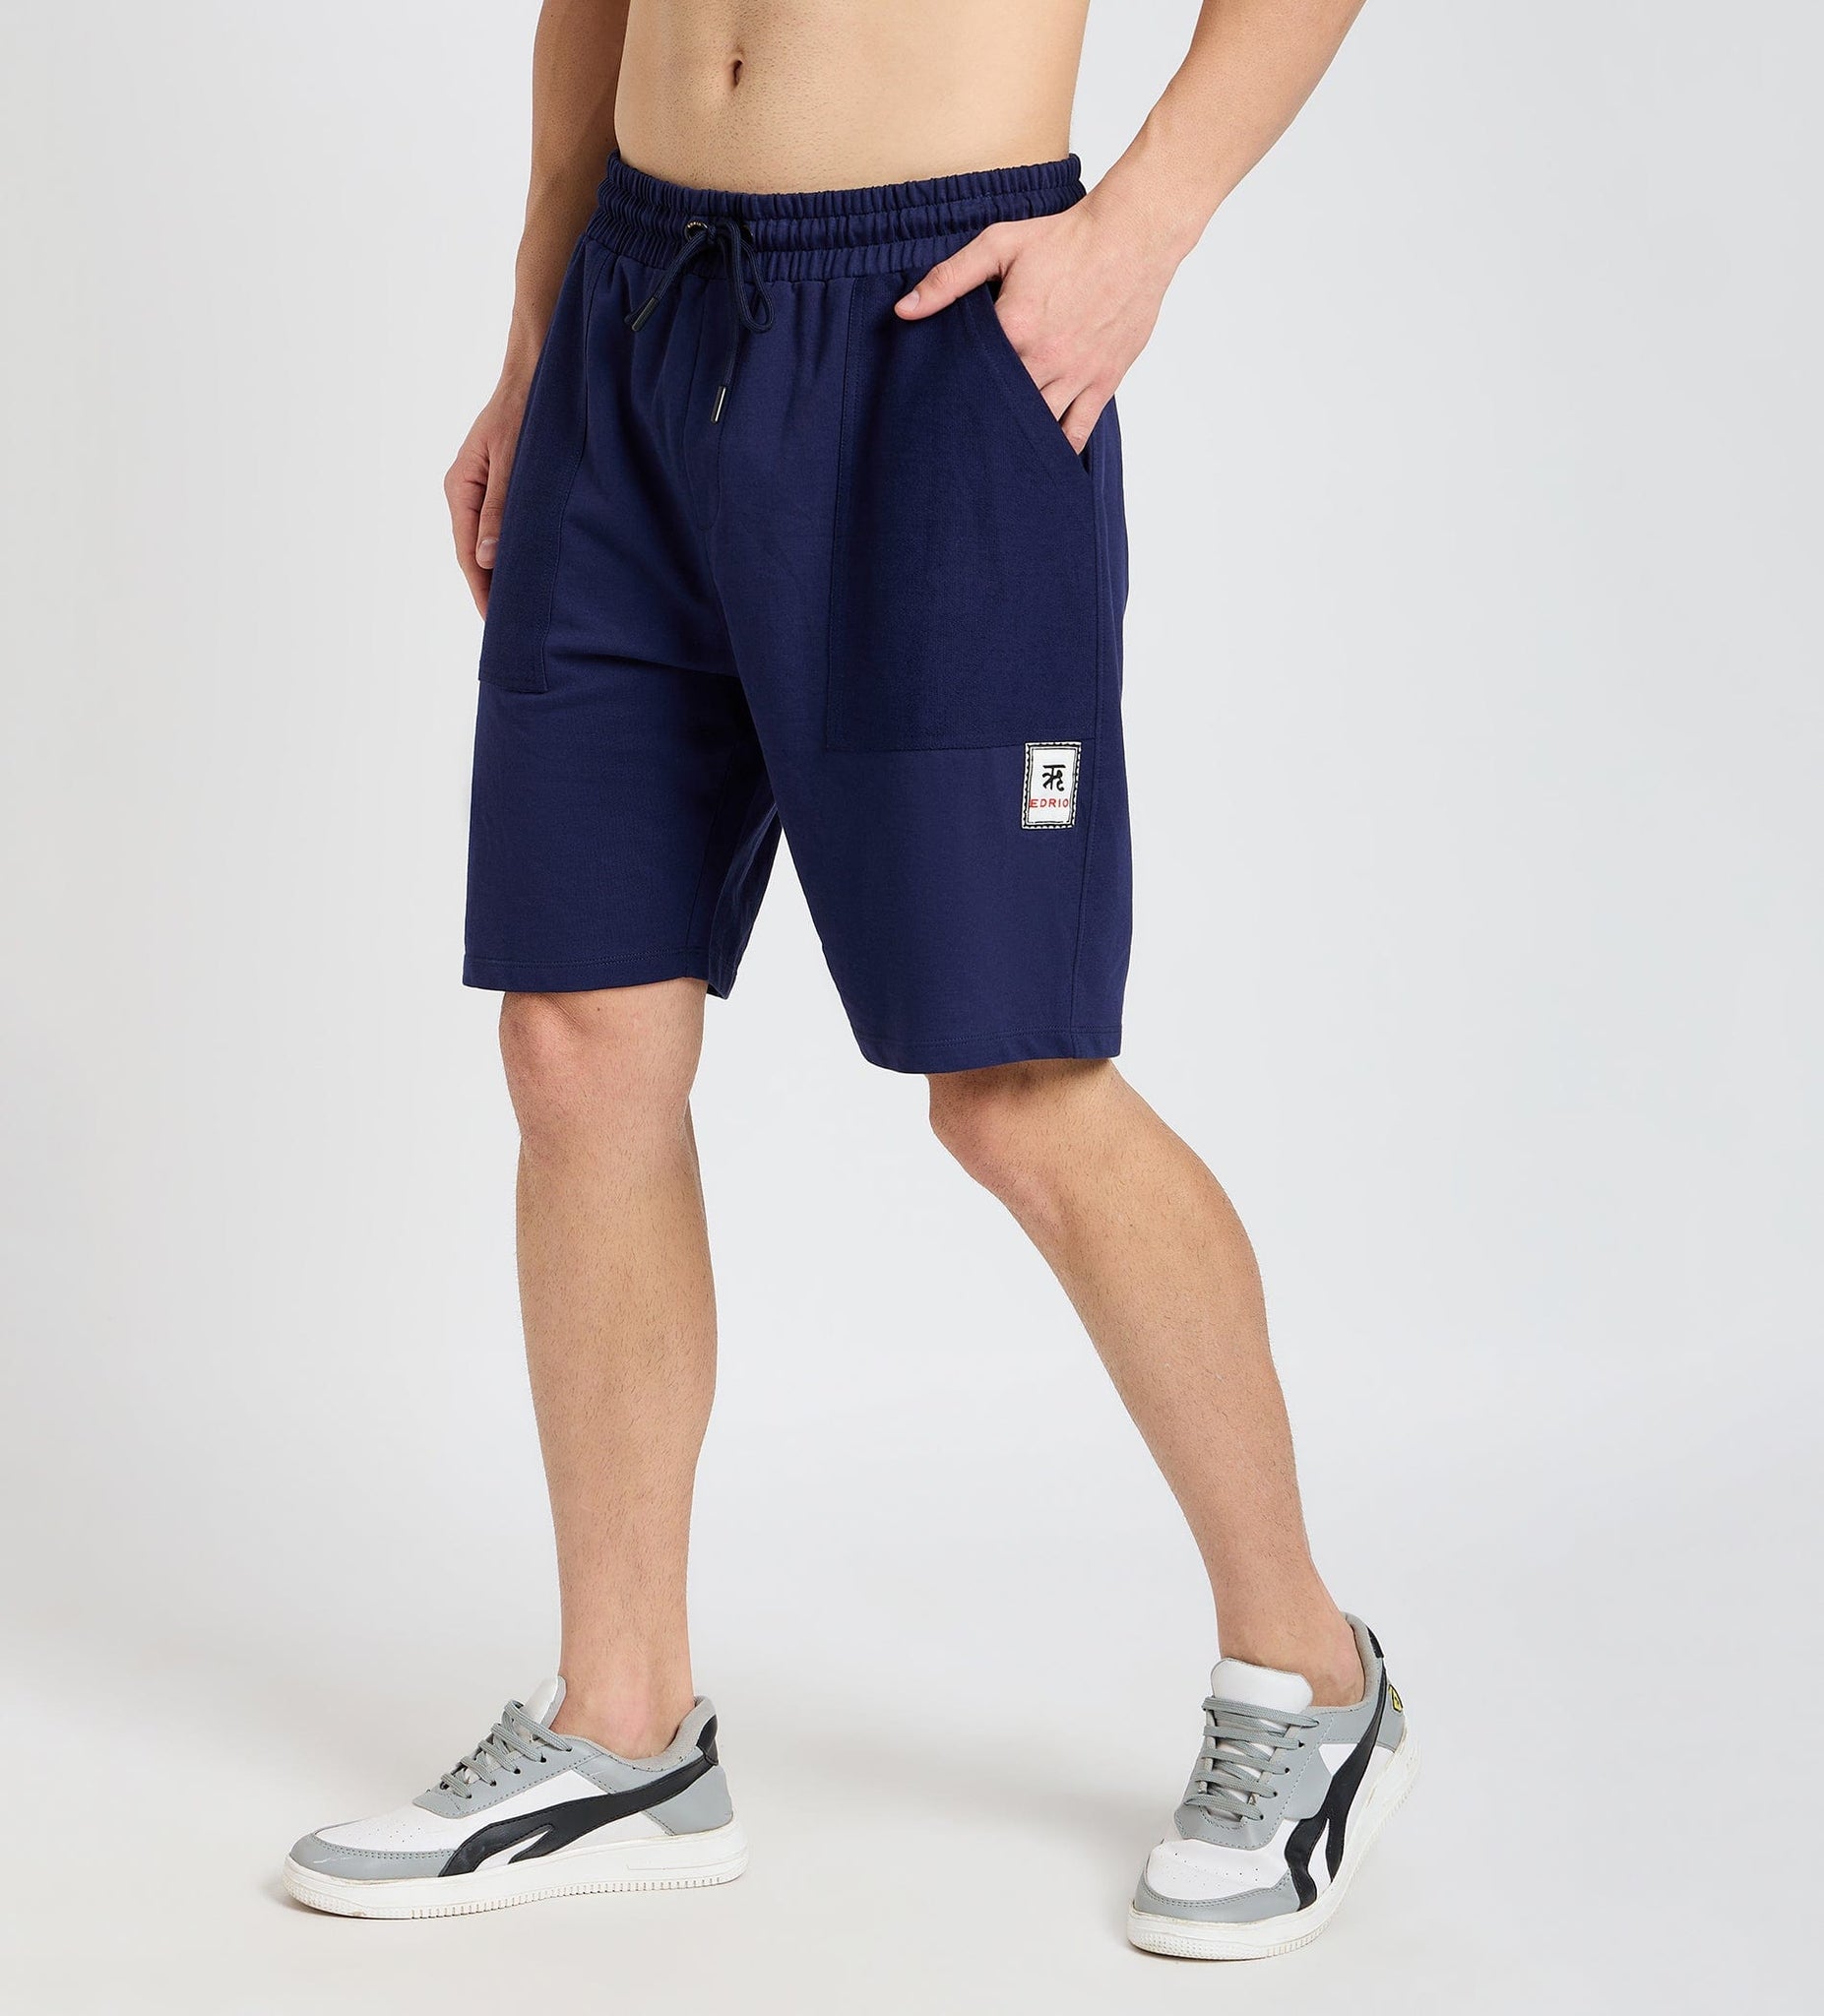 Shorts Shorts Navy Blue Textured pocket Shorts For Men